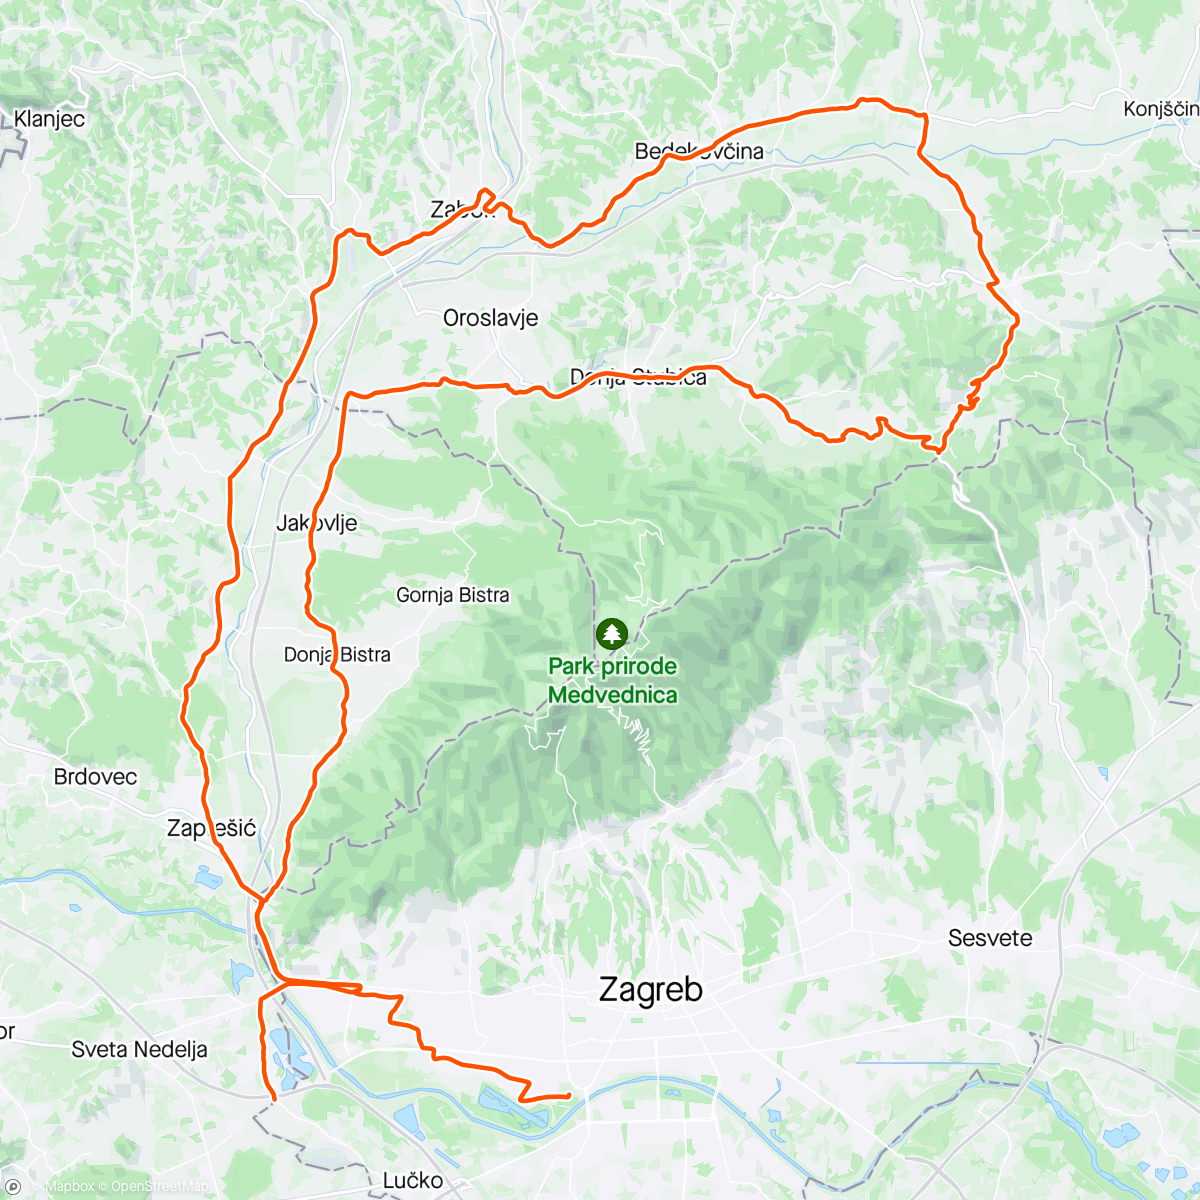 「Šbz trening dužina/distanca Km+」活動的地圖